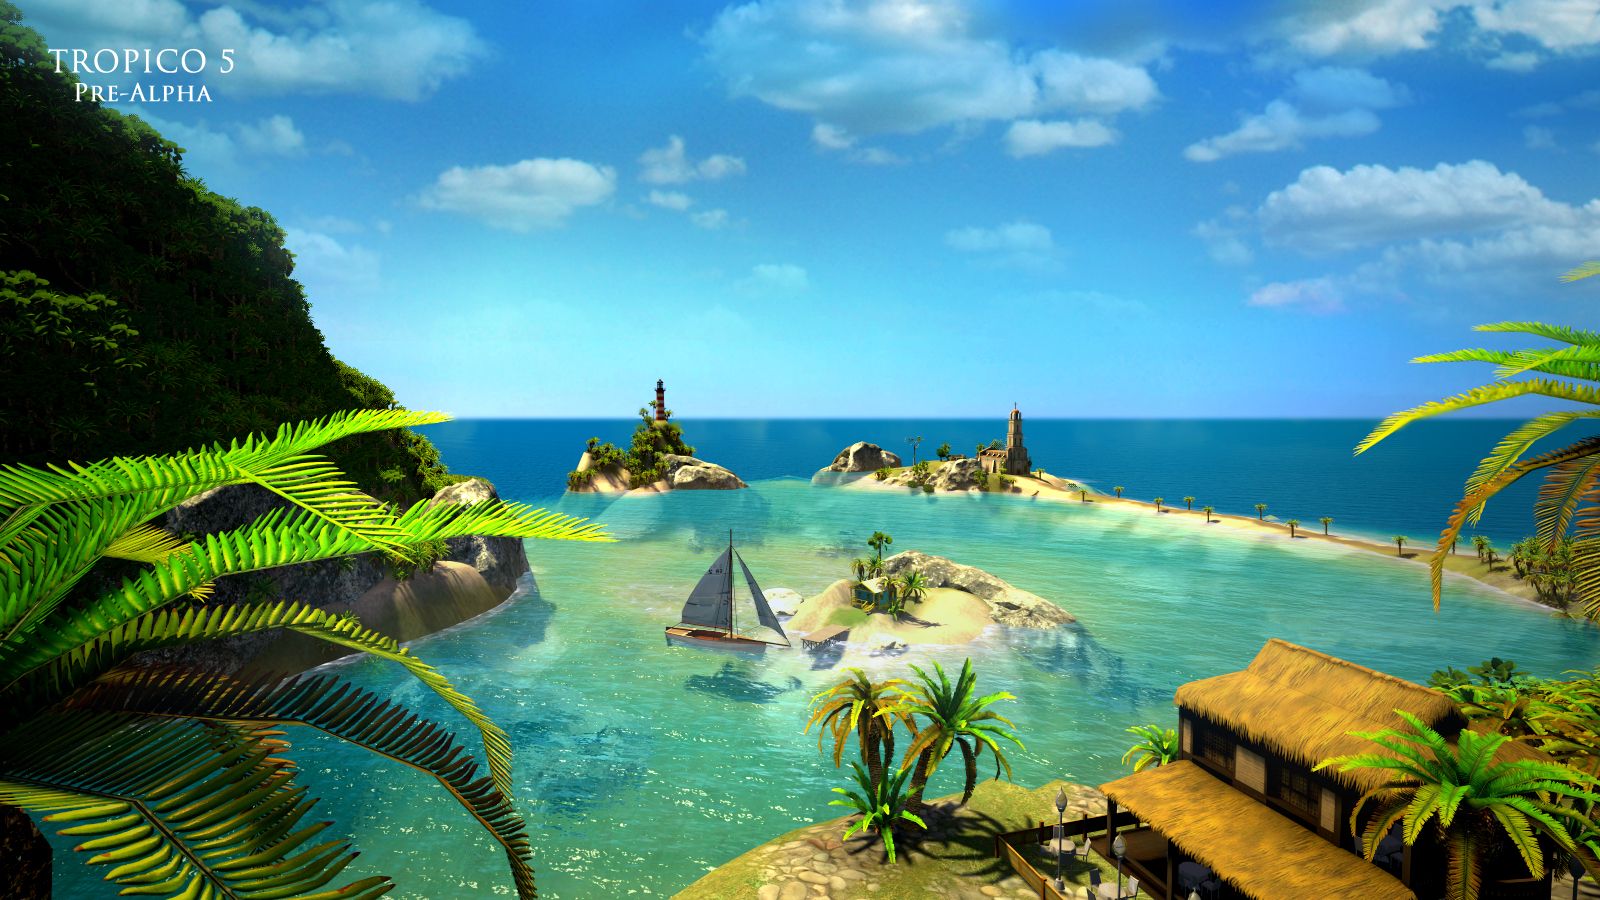 Best 54+ Tropico 5 Wallpapers on HipWallpapers